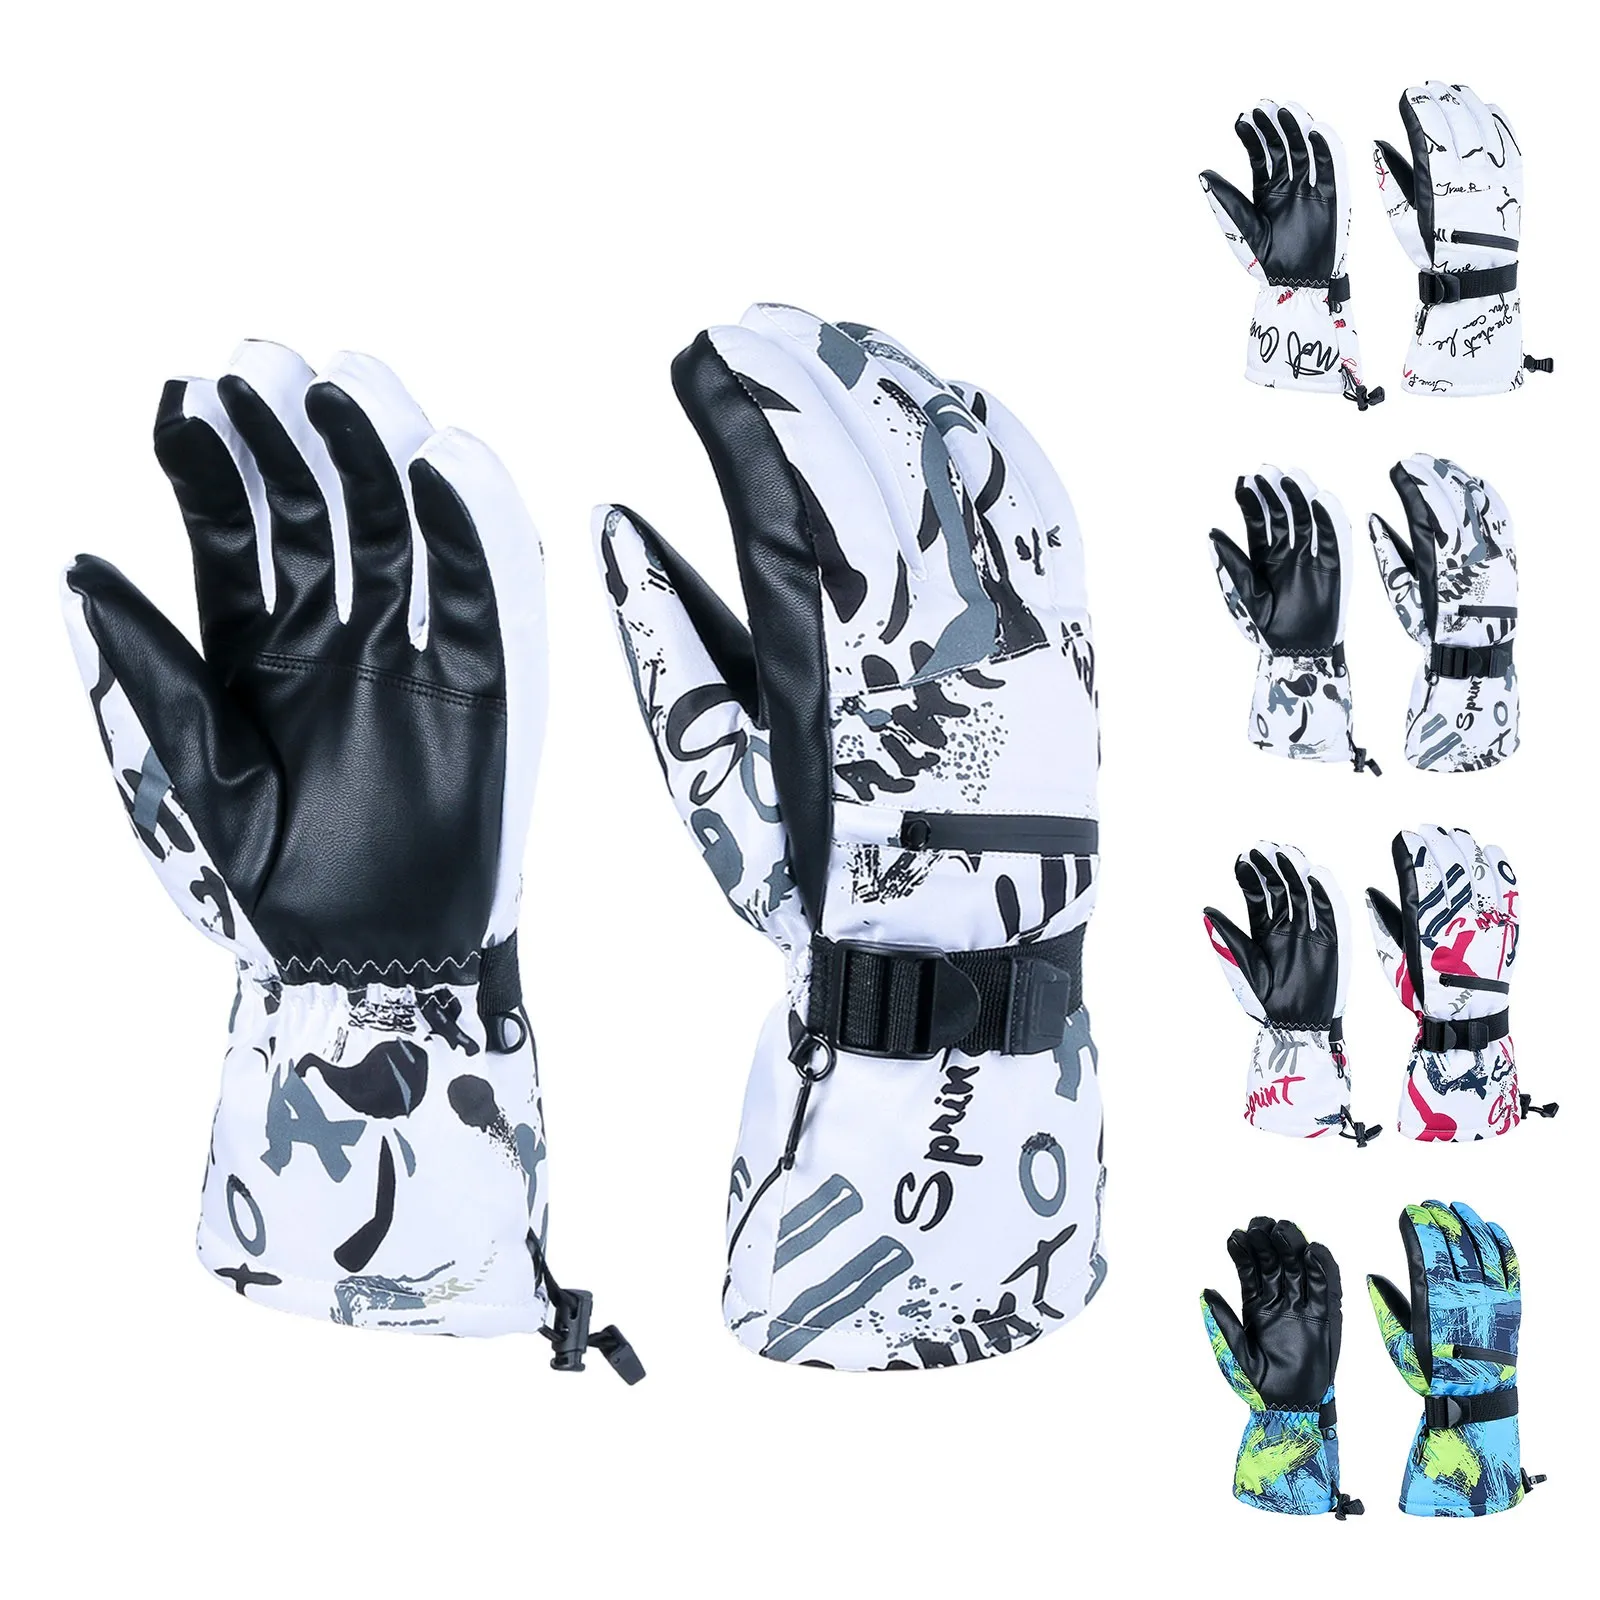 

In Stock Ski Gloves Waterproof Breathable Snowboard Gloves Touchscreen Warm Winter Snow Gloves Fits Both Men & Women#8